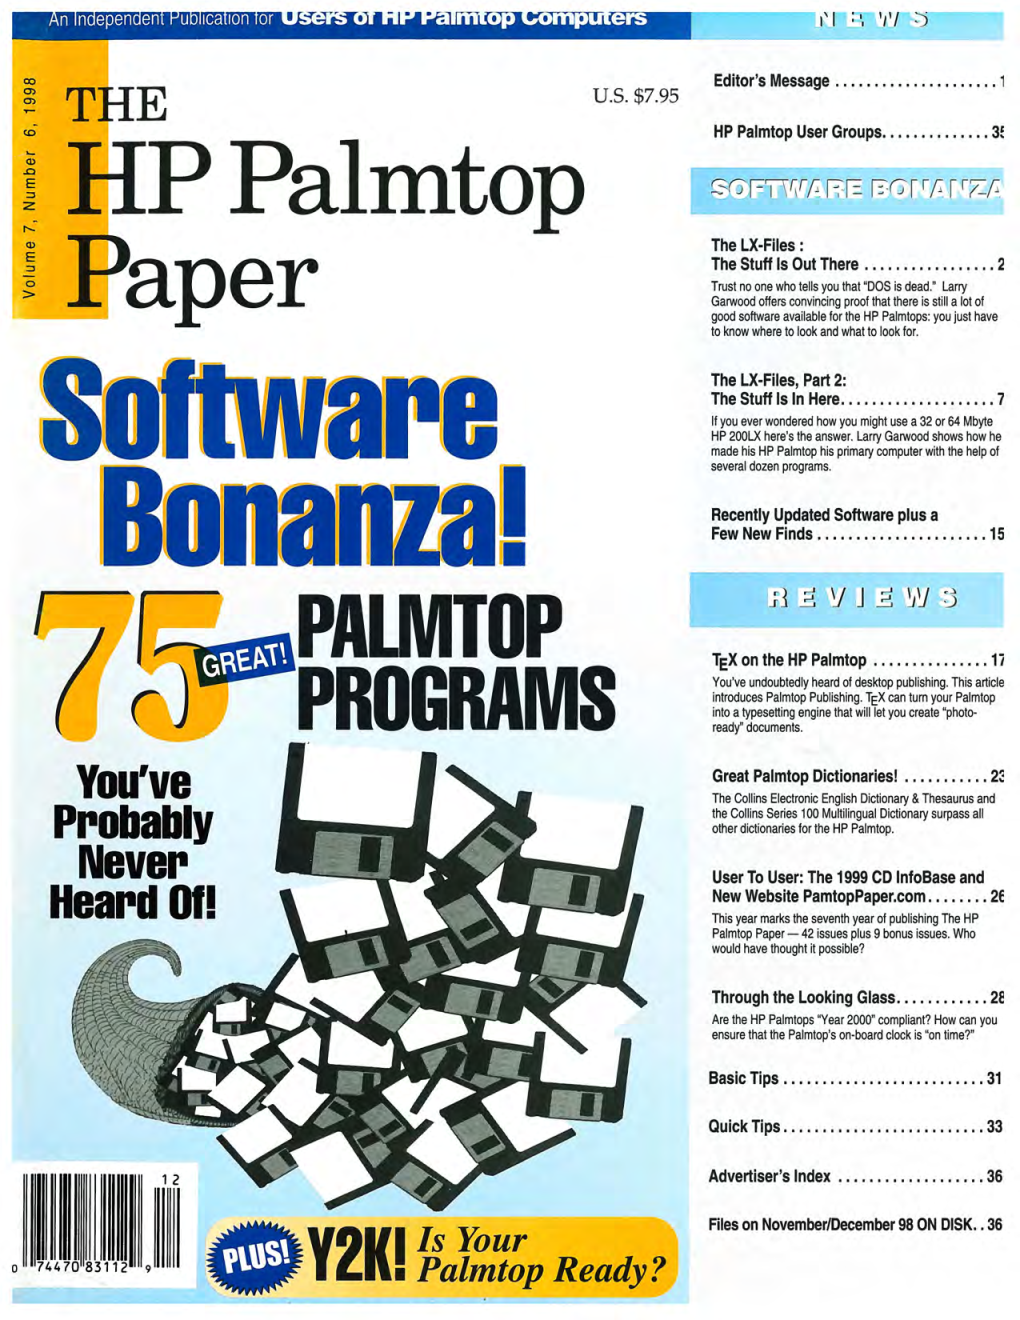 Palmtop User Groups ••